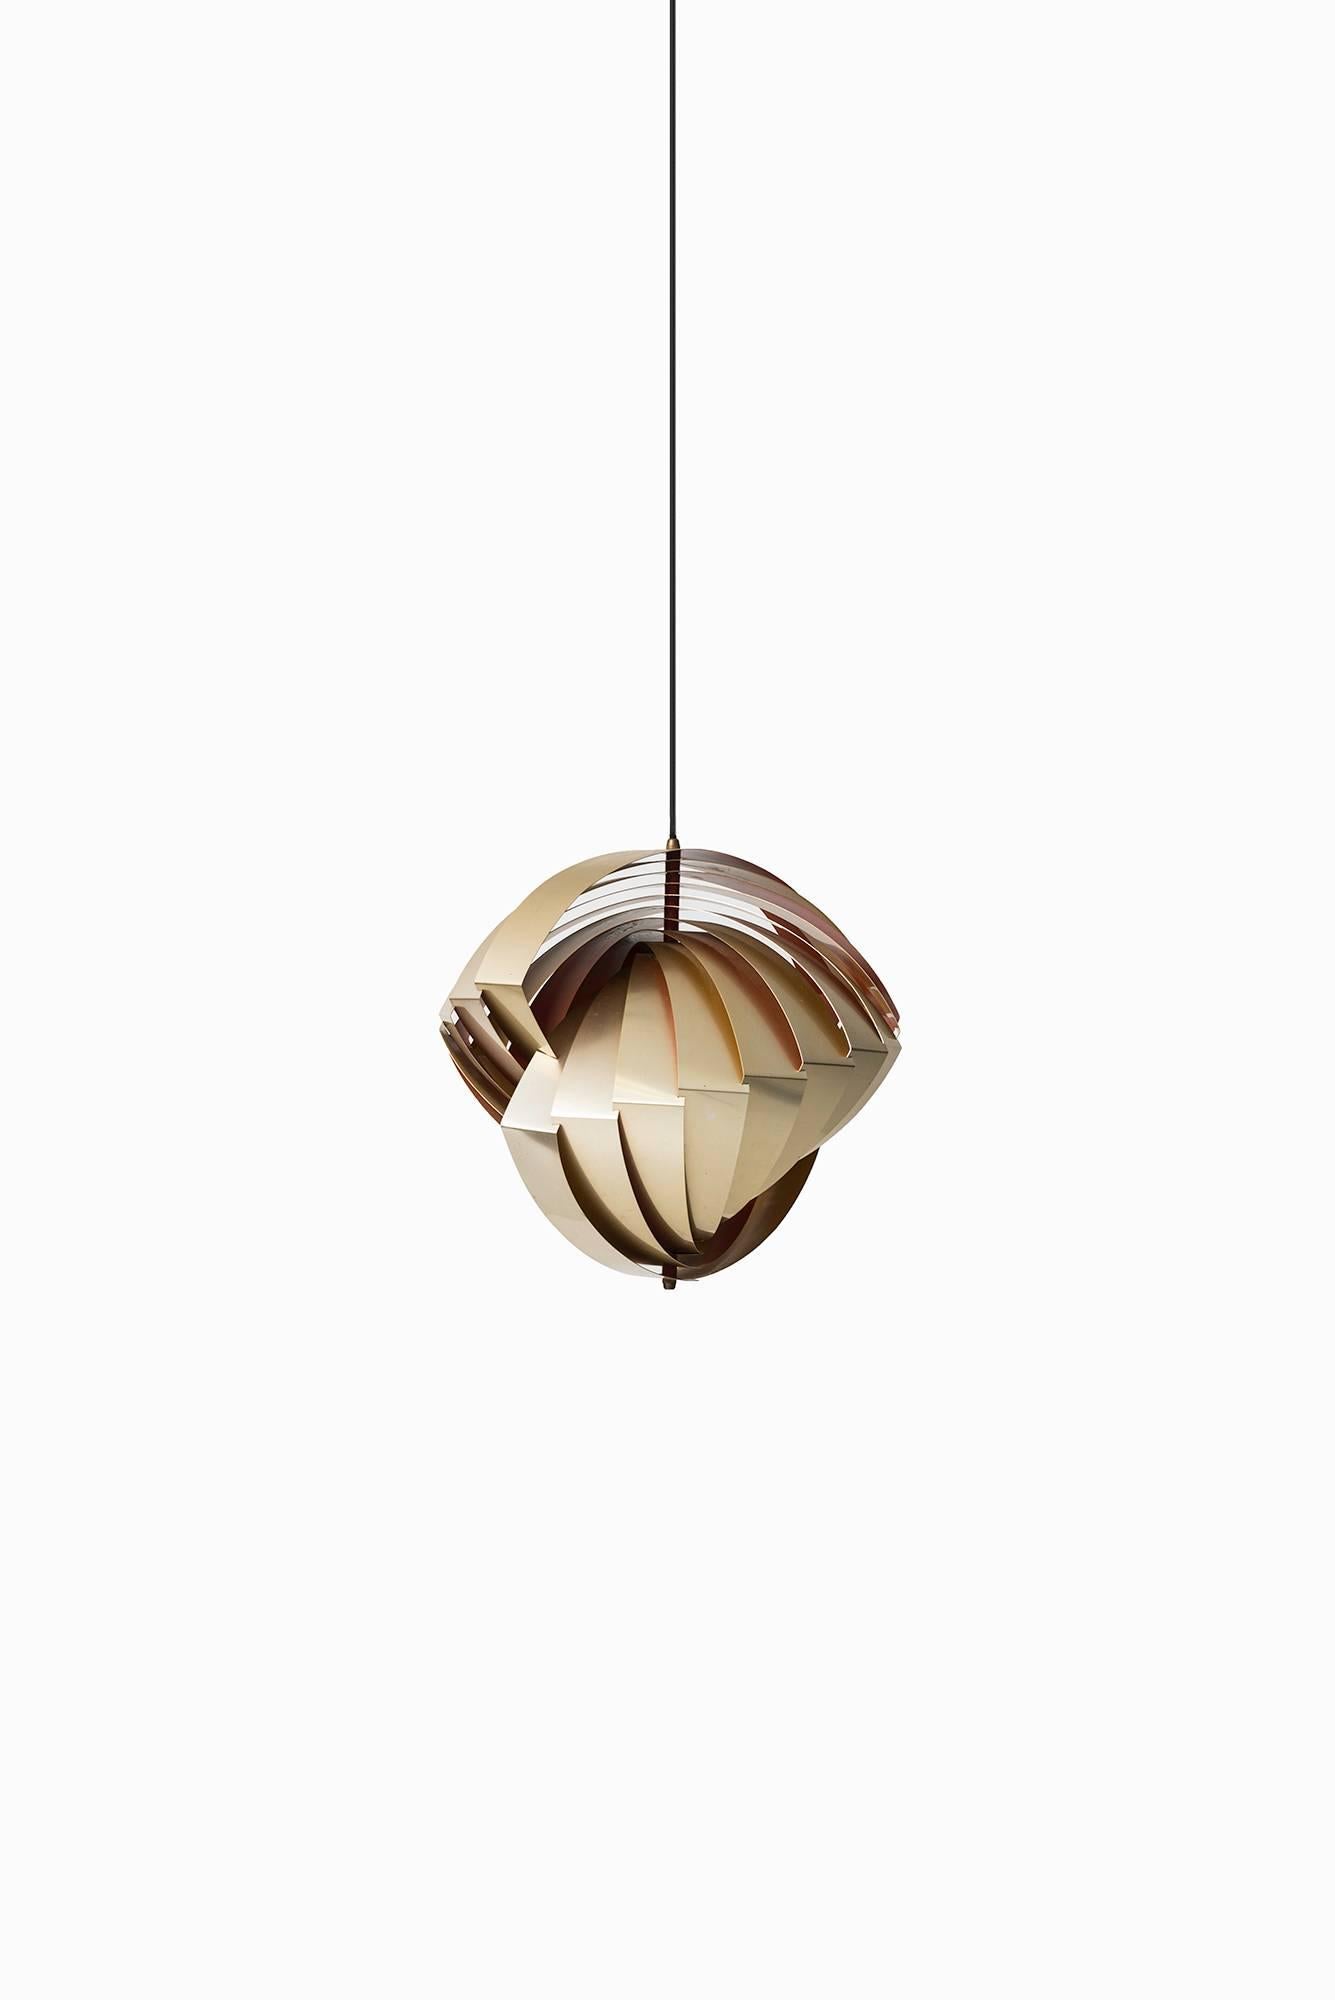 Rare ceiling lamp model Konkylie designed by Louis Weisdorf. Produced by Lyfa in Denmark.